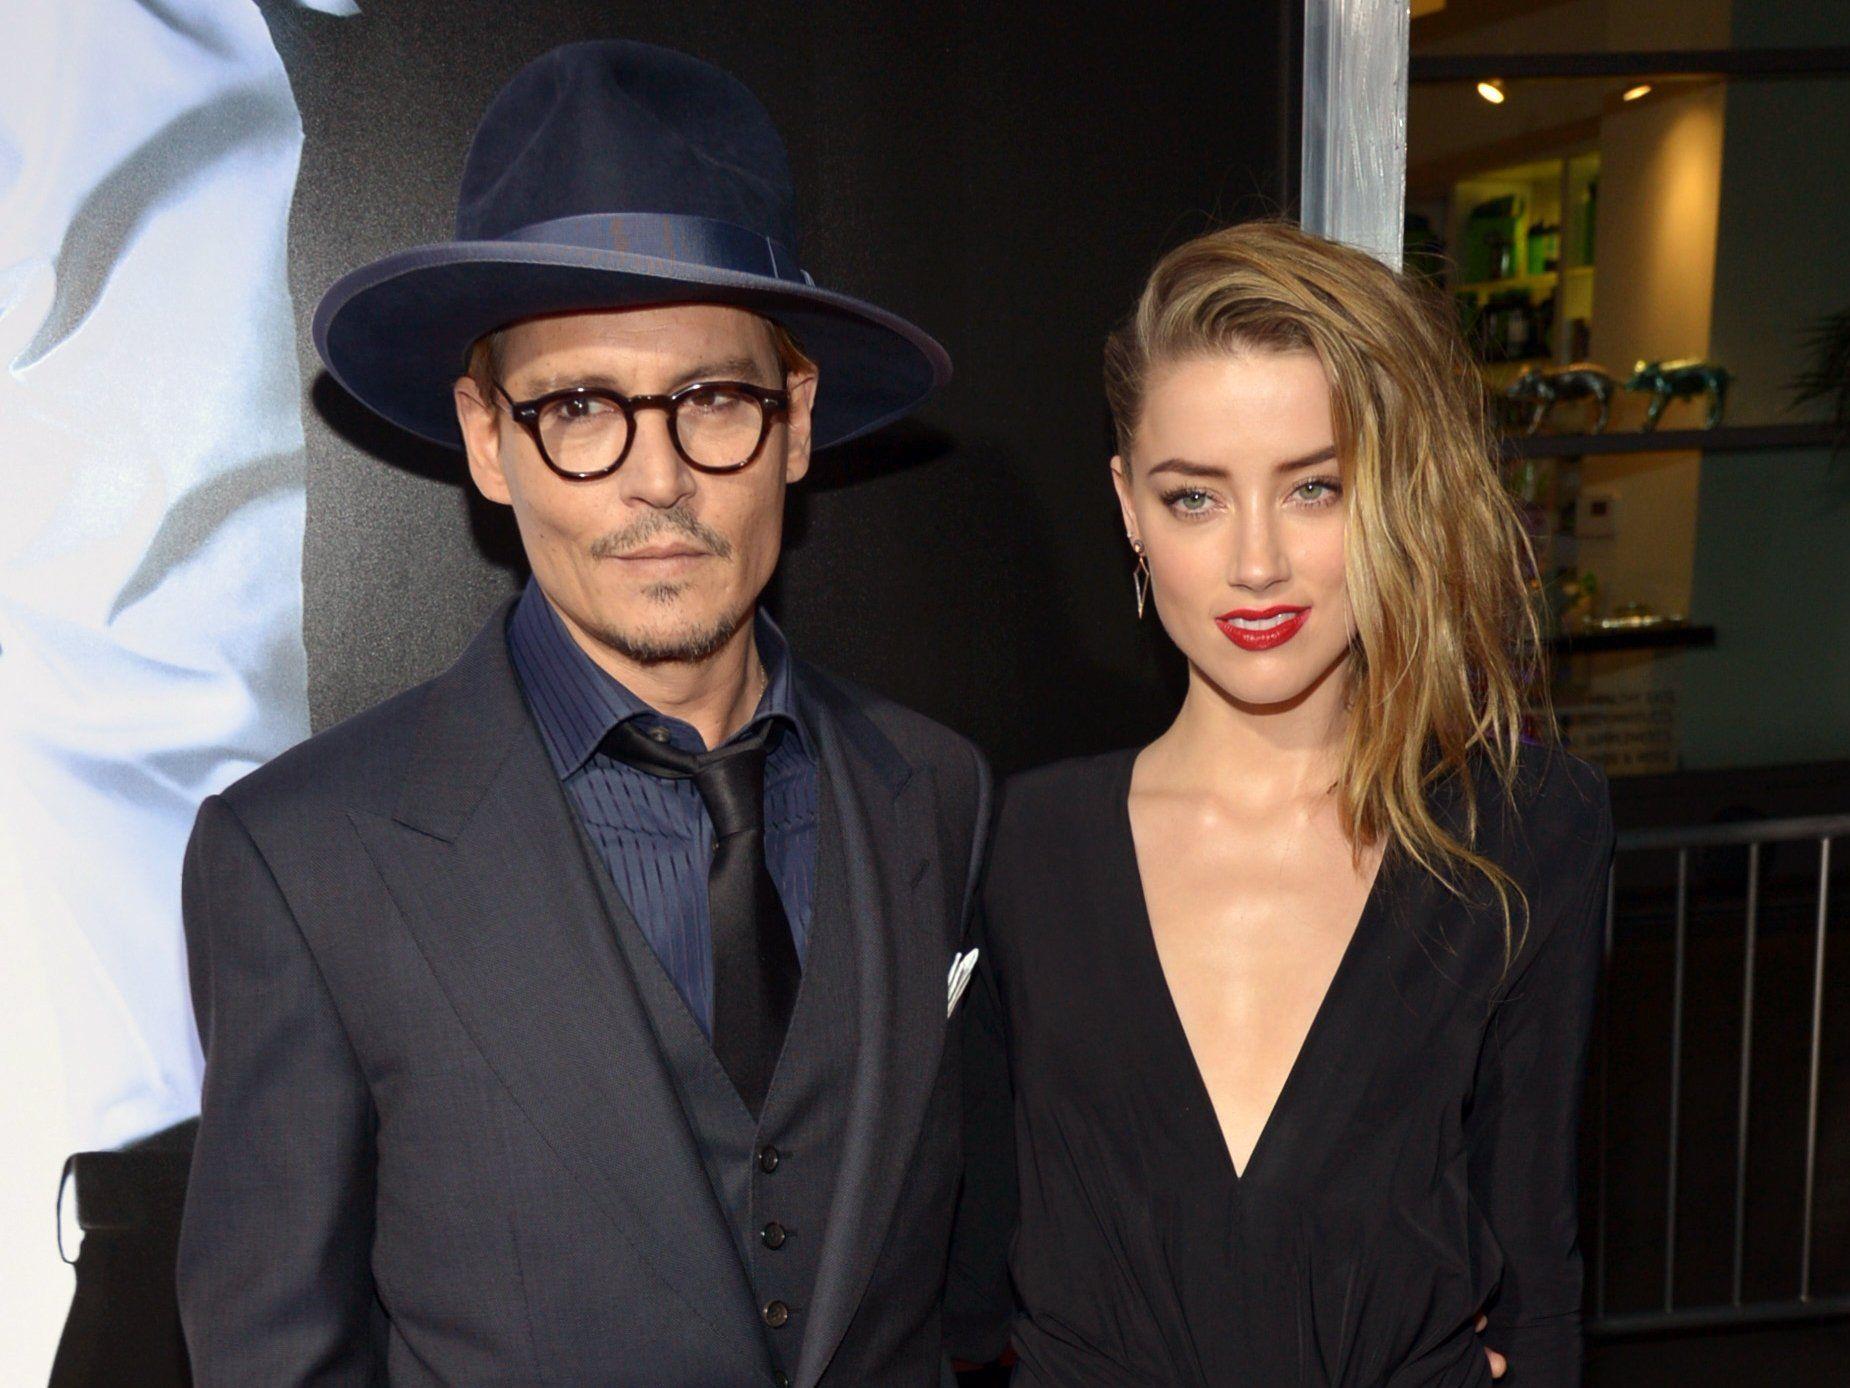 Johnny Depp ist nun offiziell vom Markt - laut Medienberichten hat er Freundin Amber Heard geheiratet.